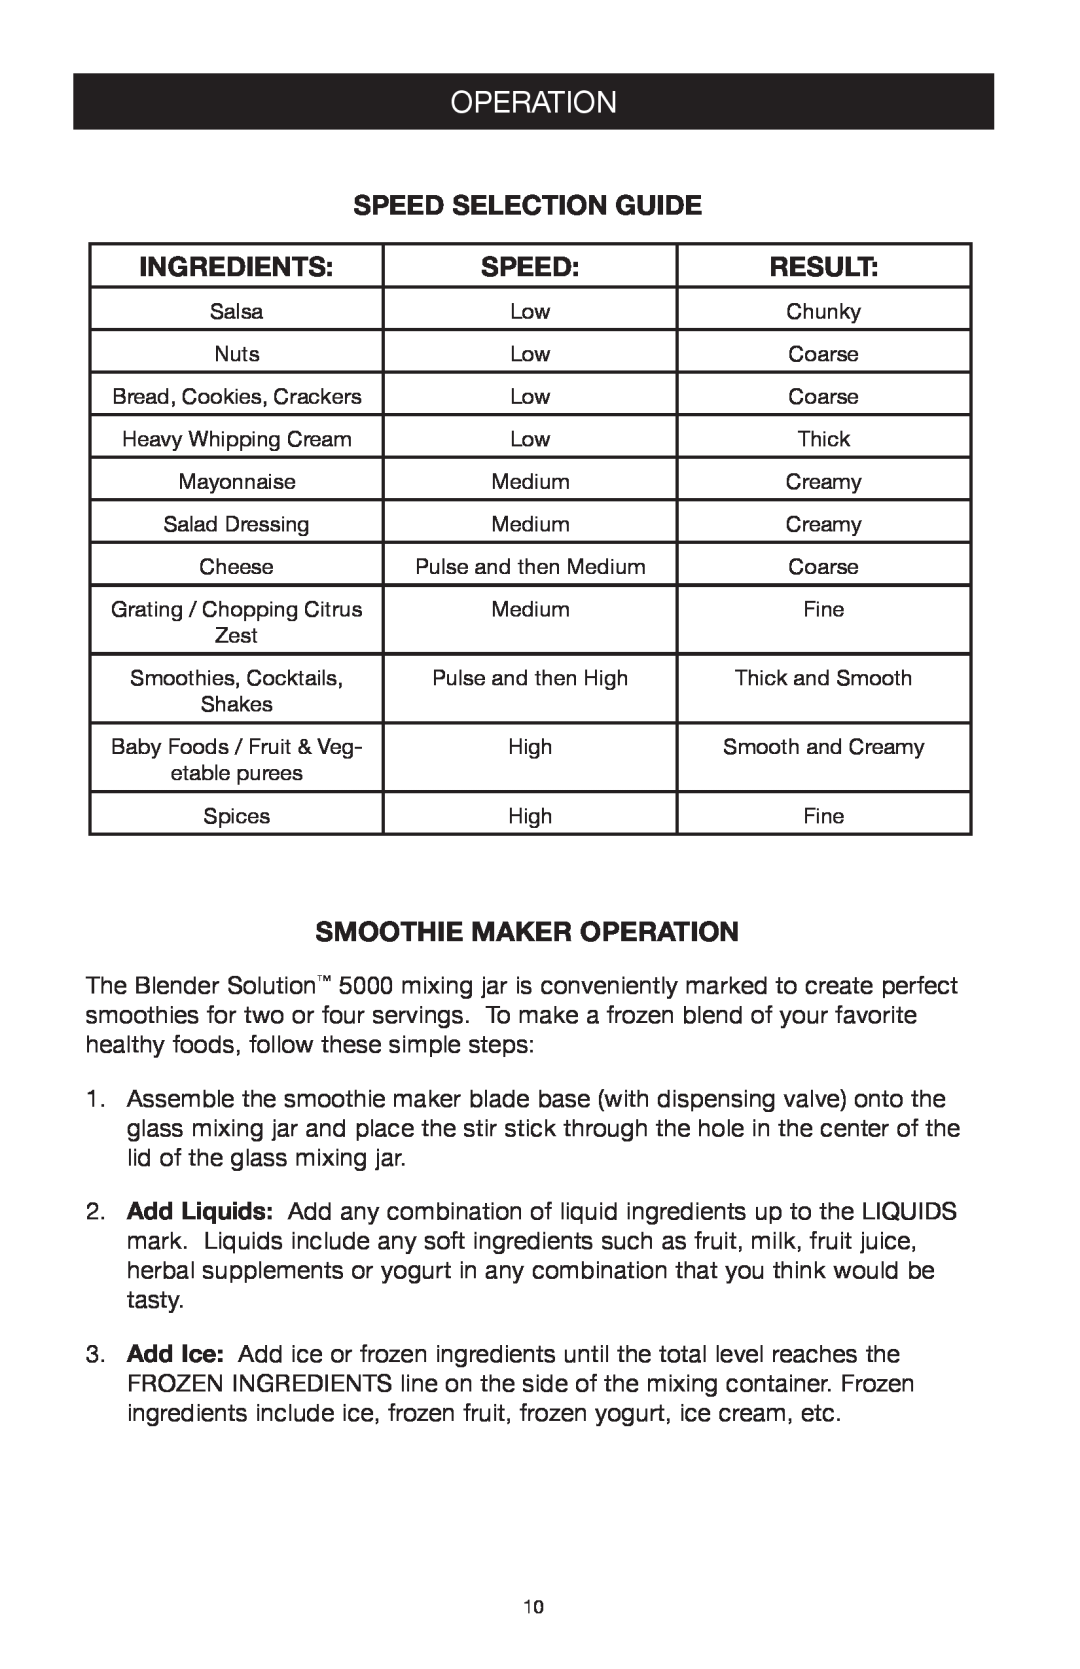 West Bend Back to Basics 5000 manuel dutilisation Speed Selection Guide, Ingredients, Smoothie Maker Operation 